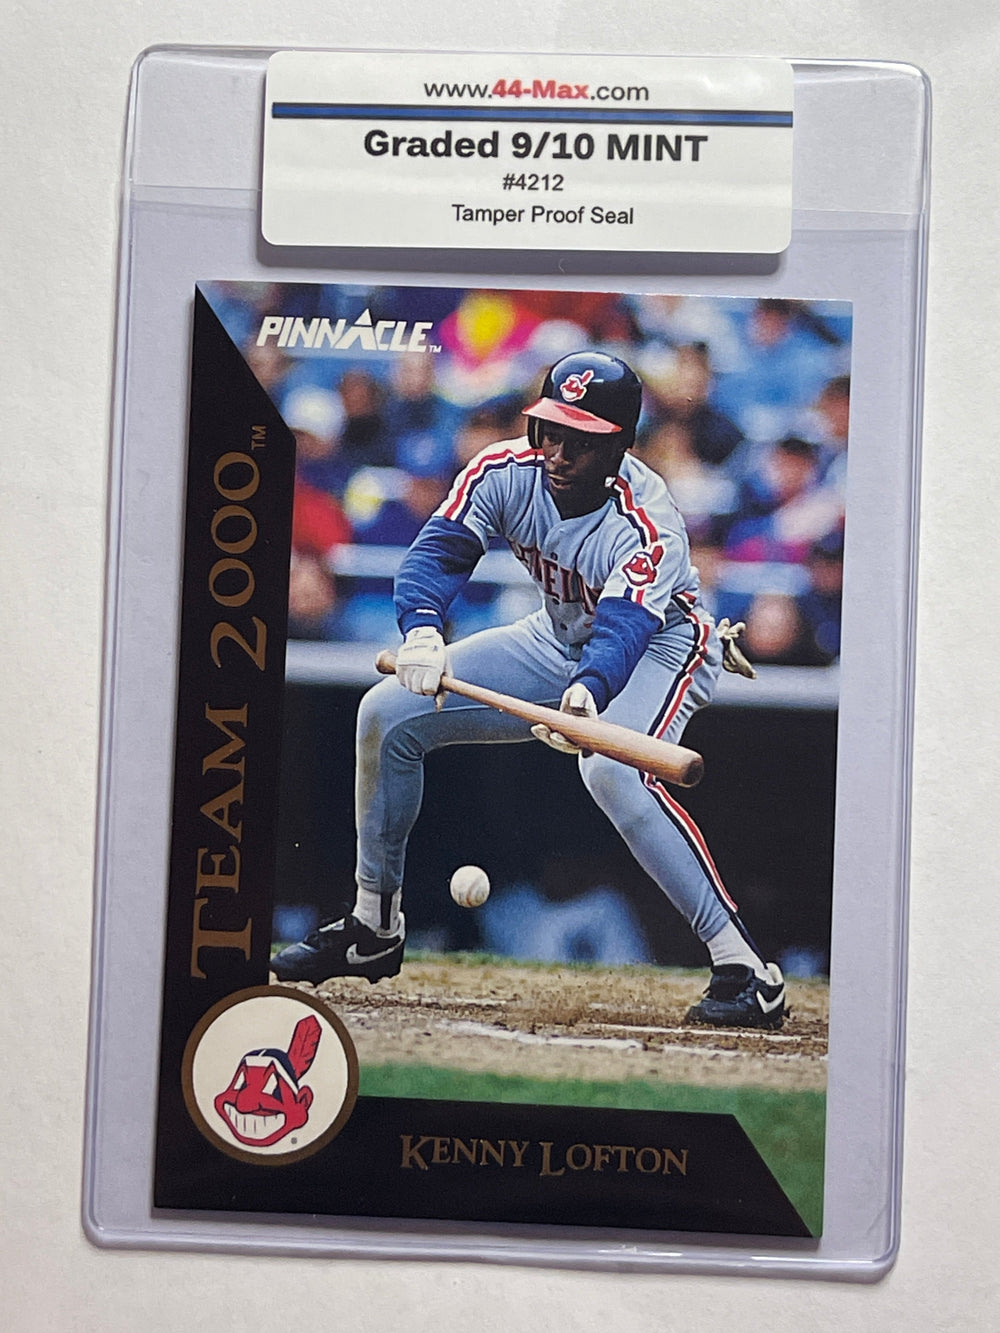 Kenny Lofton Team 2000 1992 Pinnacle Baseball Card. 44-Max 9/10 Mint #4212